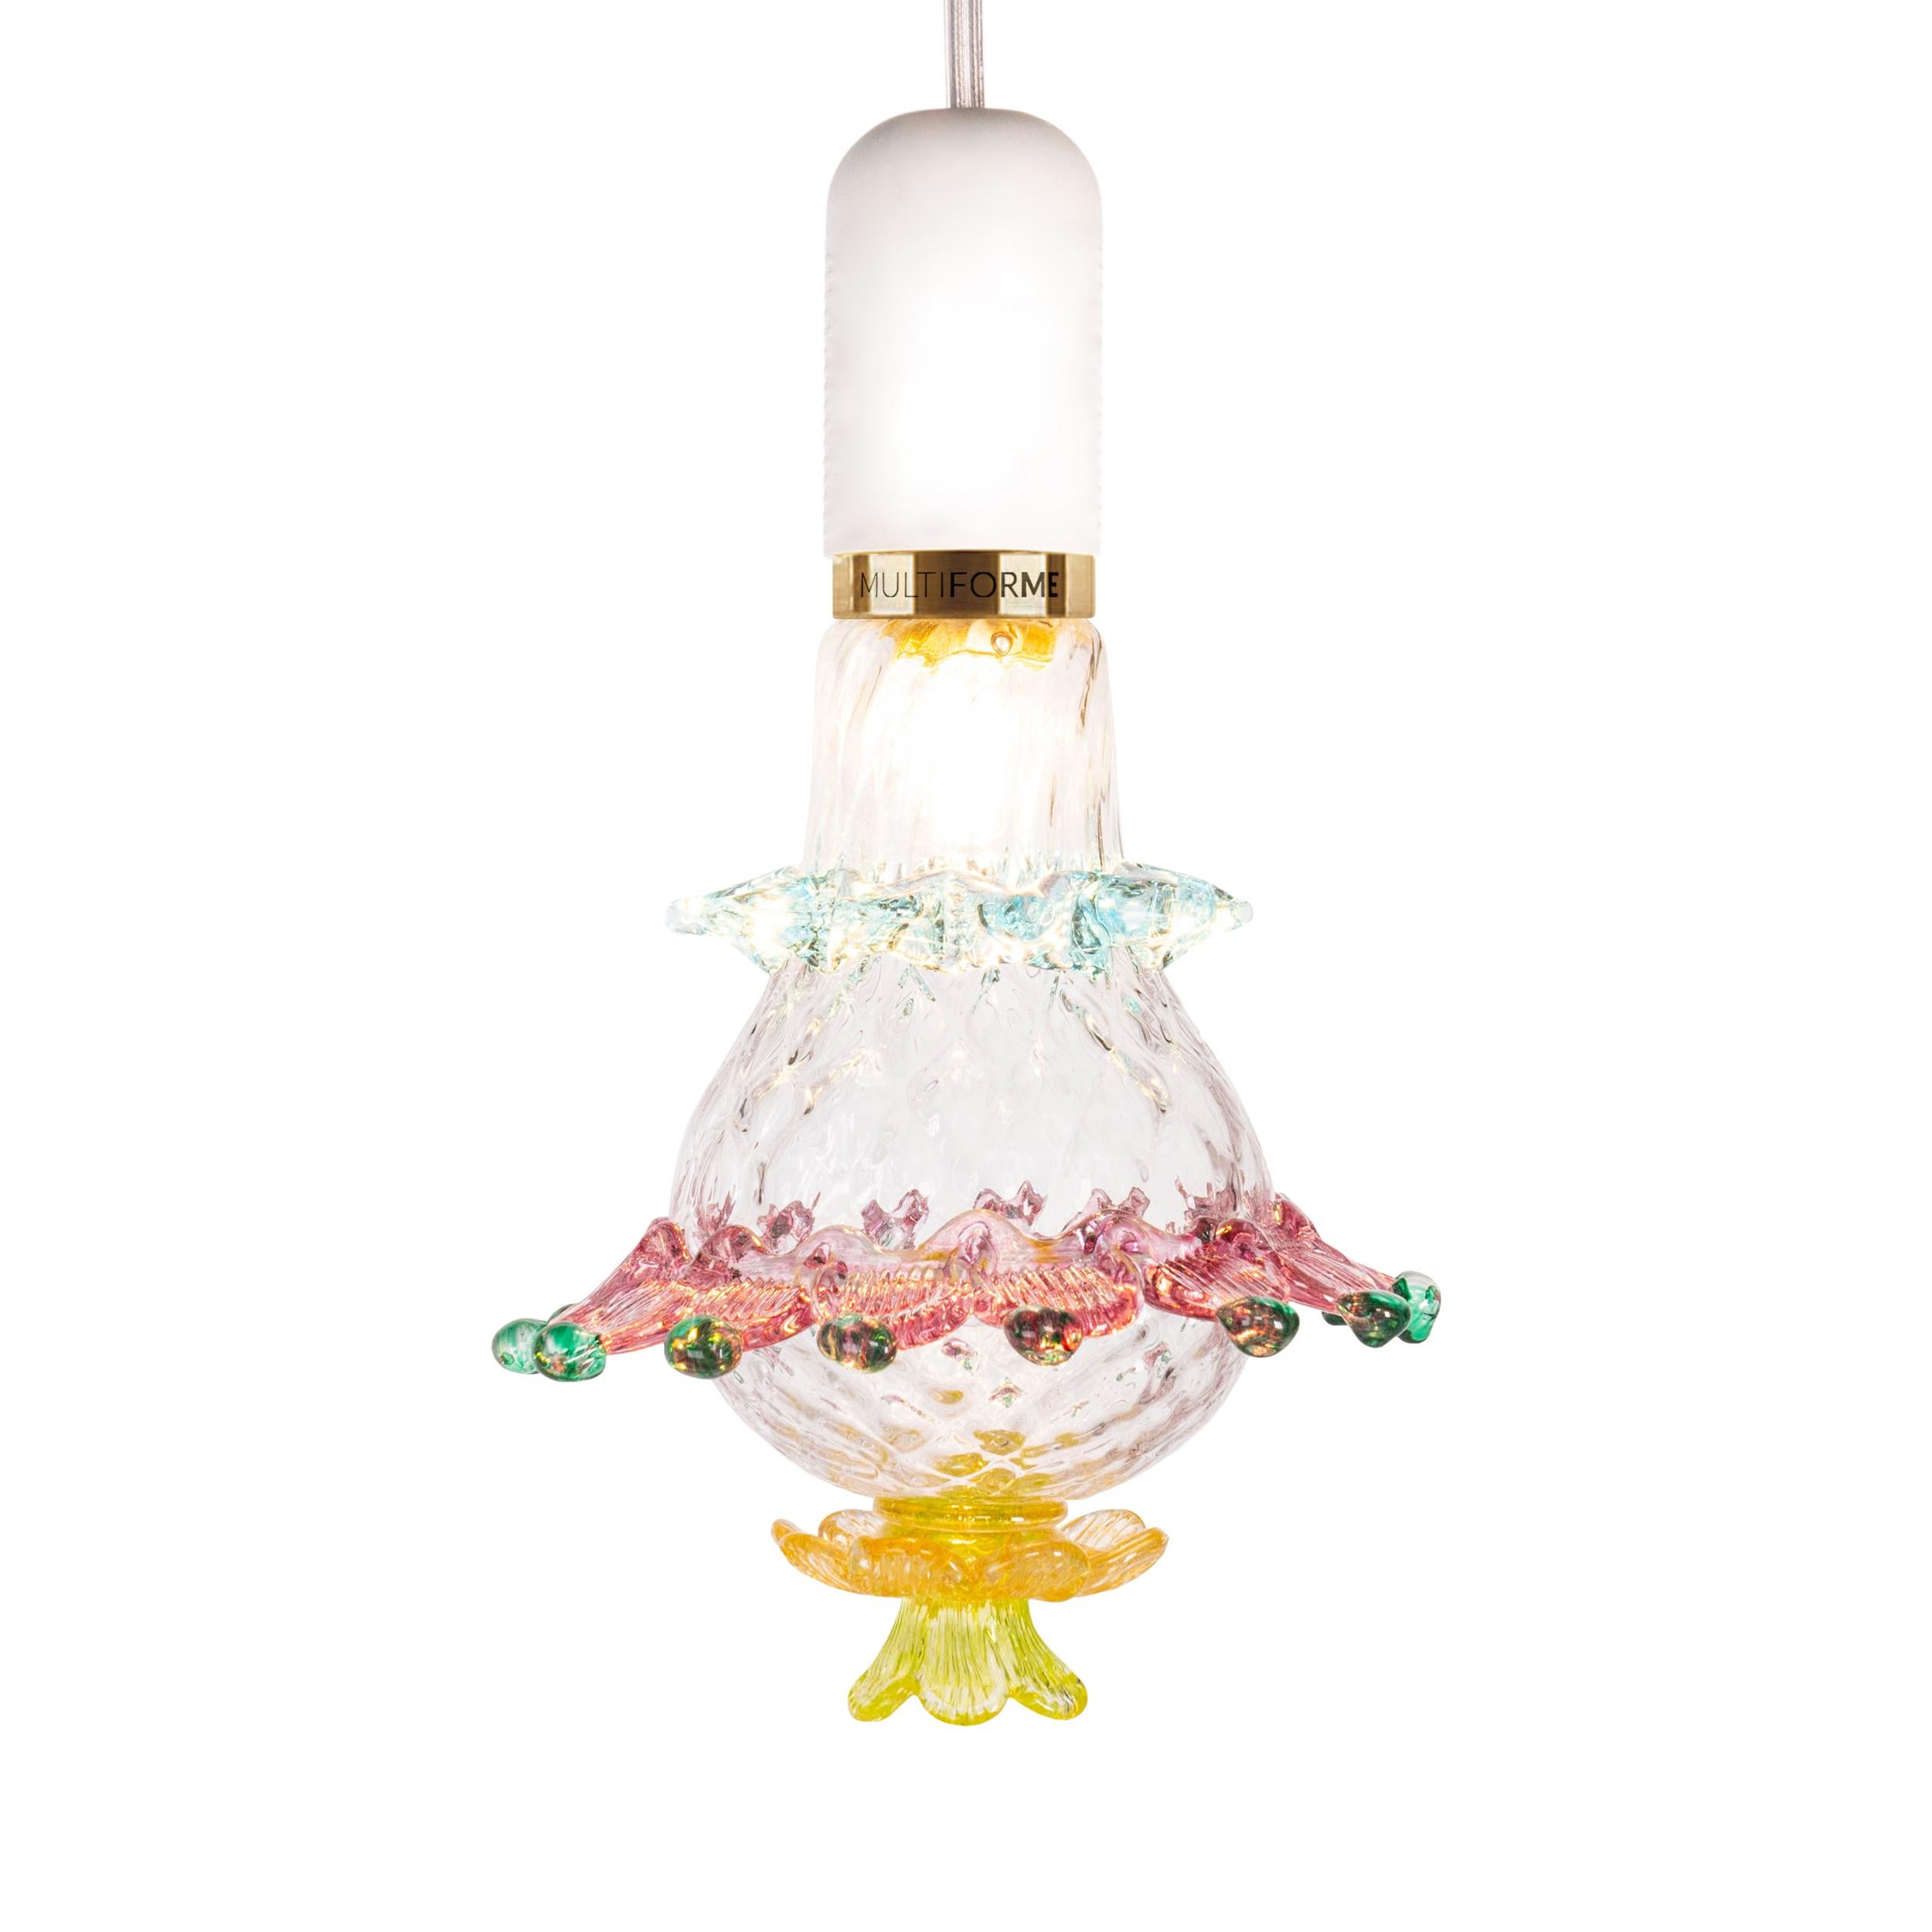 Artistic glass lightbulb chandelier Murano Bulb Marcantonio X Multiforme #01 In New Condition For Sale In Trebaseleghe, IT